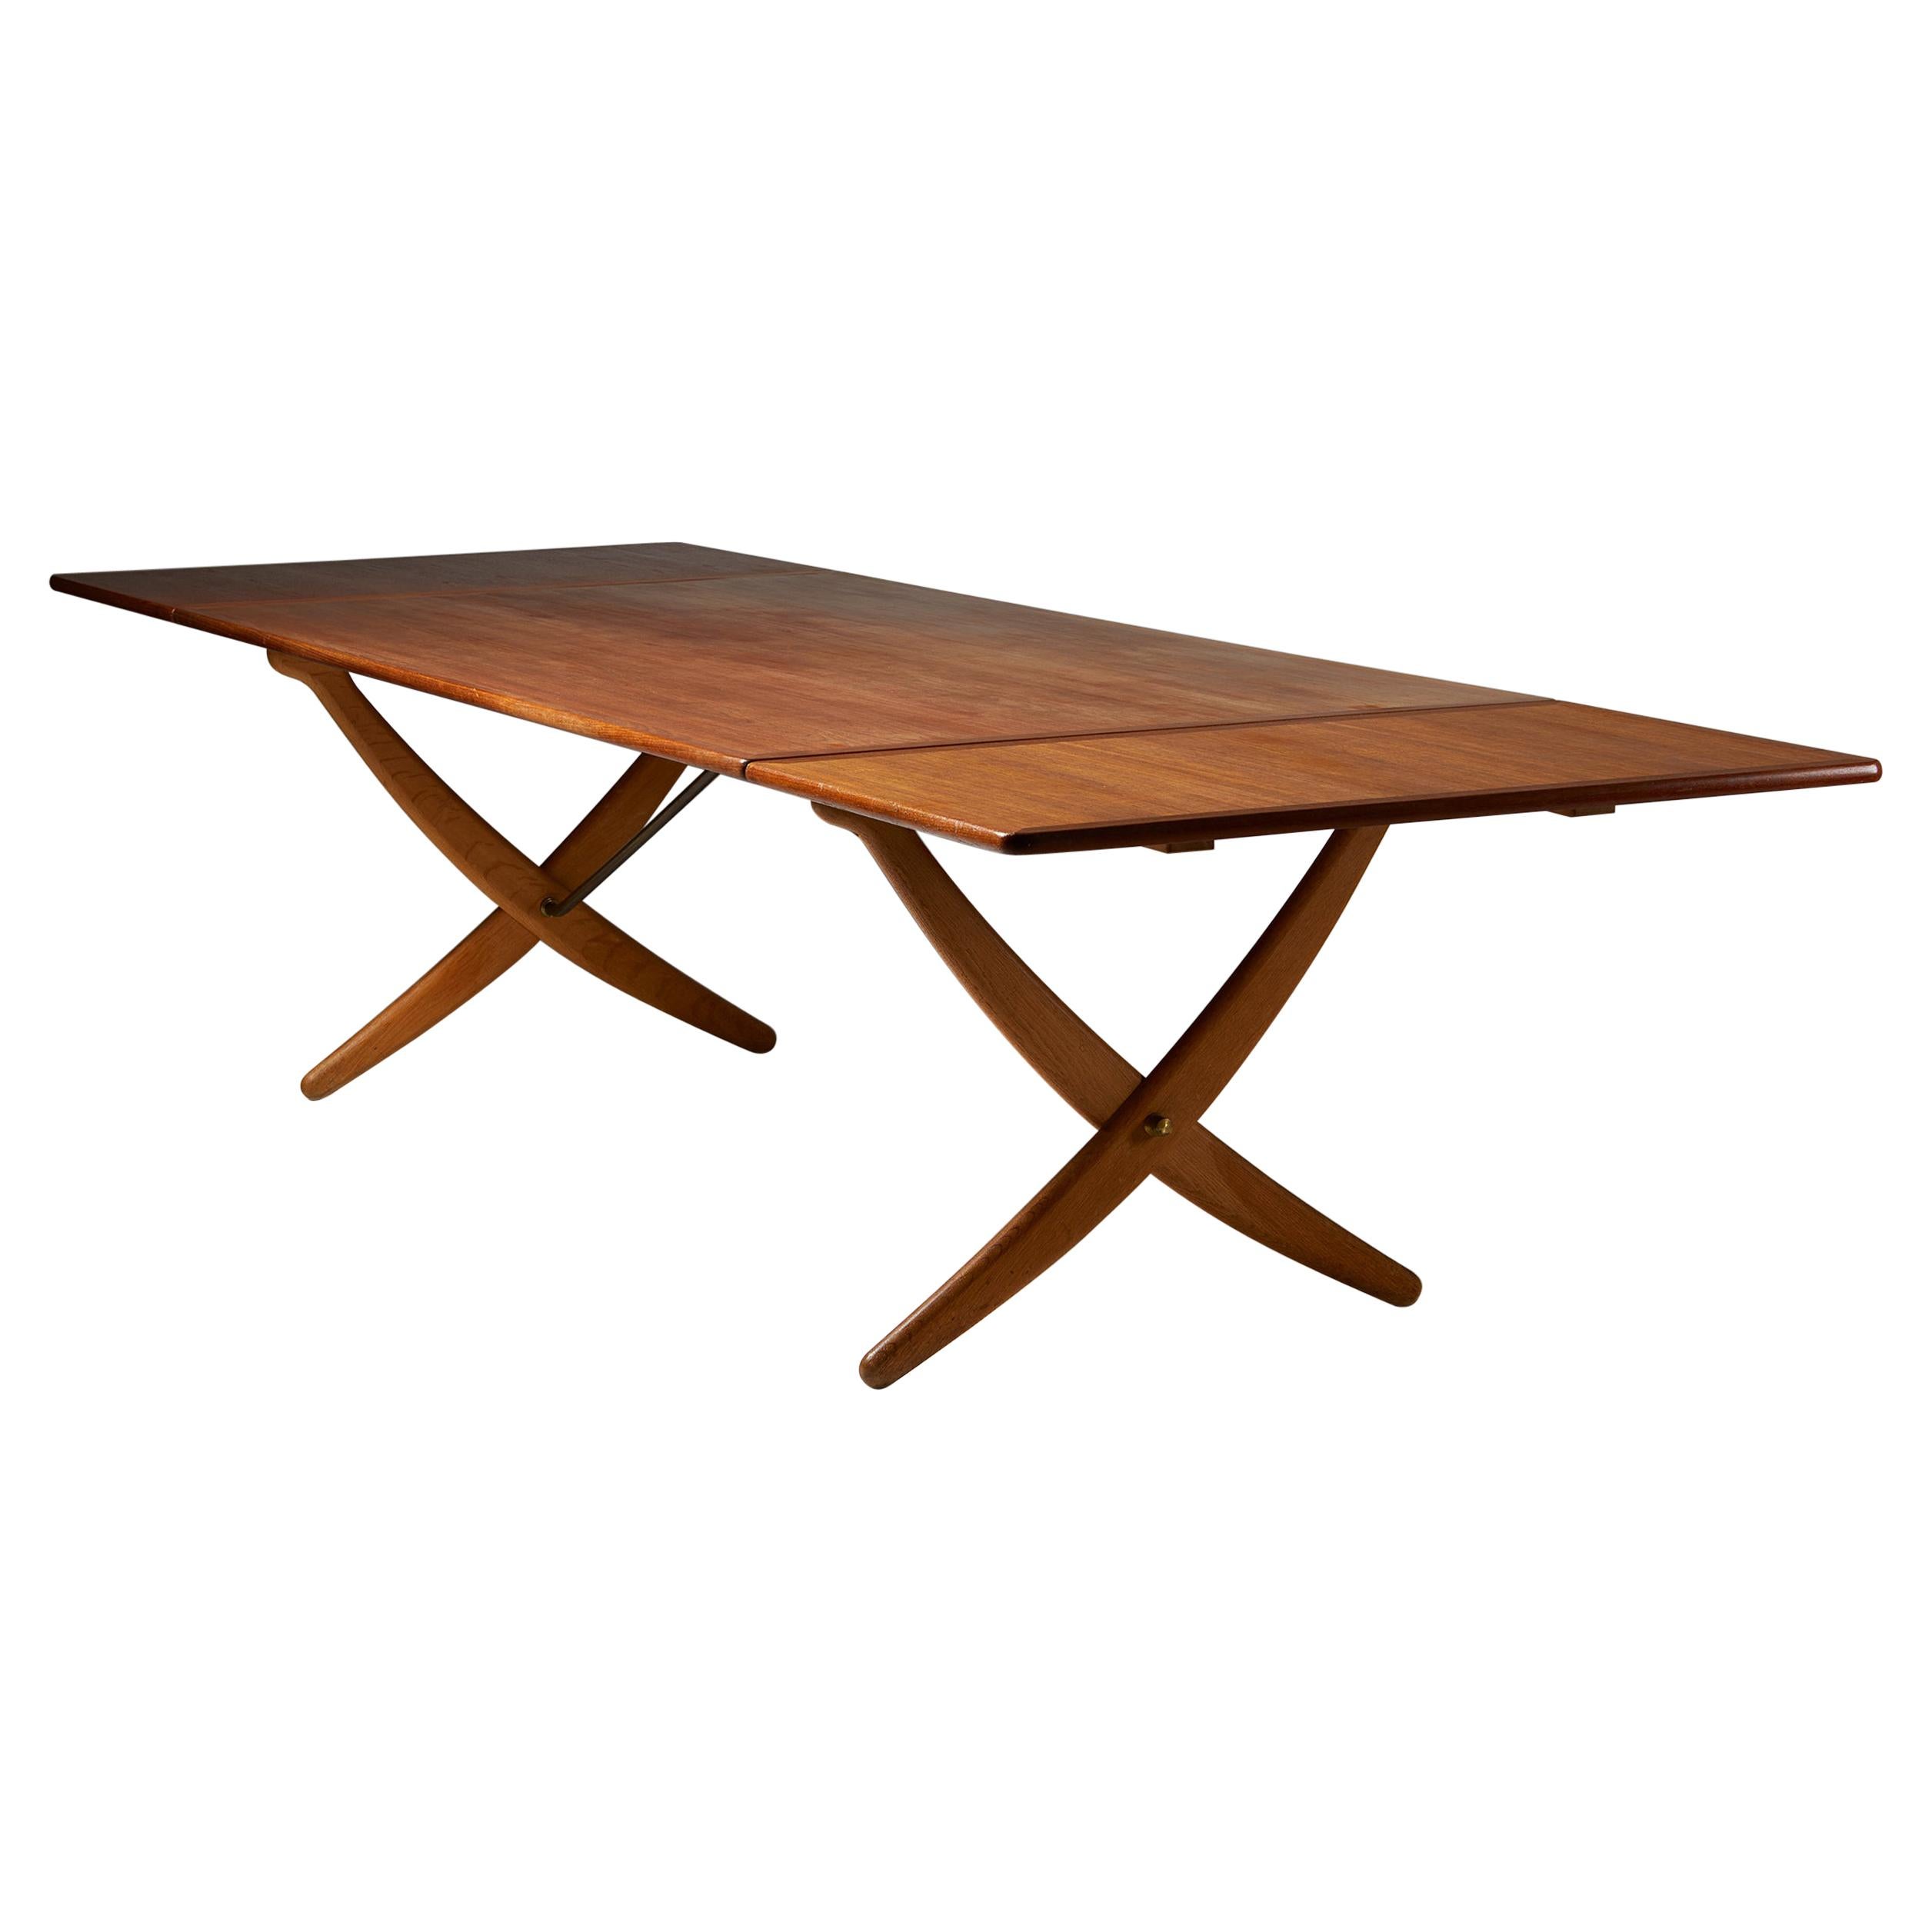 Dining Table “Sabre leg” Designed by Hans J. Wegner for Andreas Tuck, Denmark